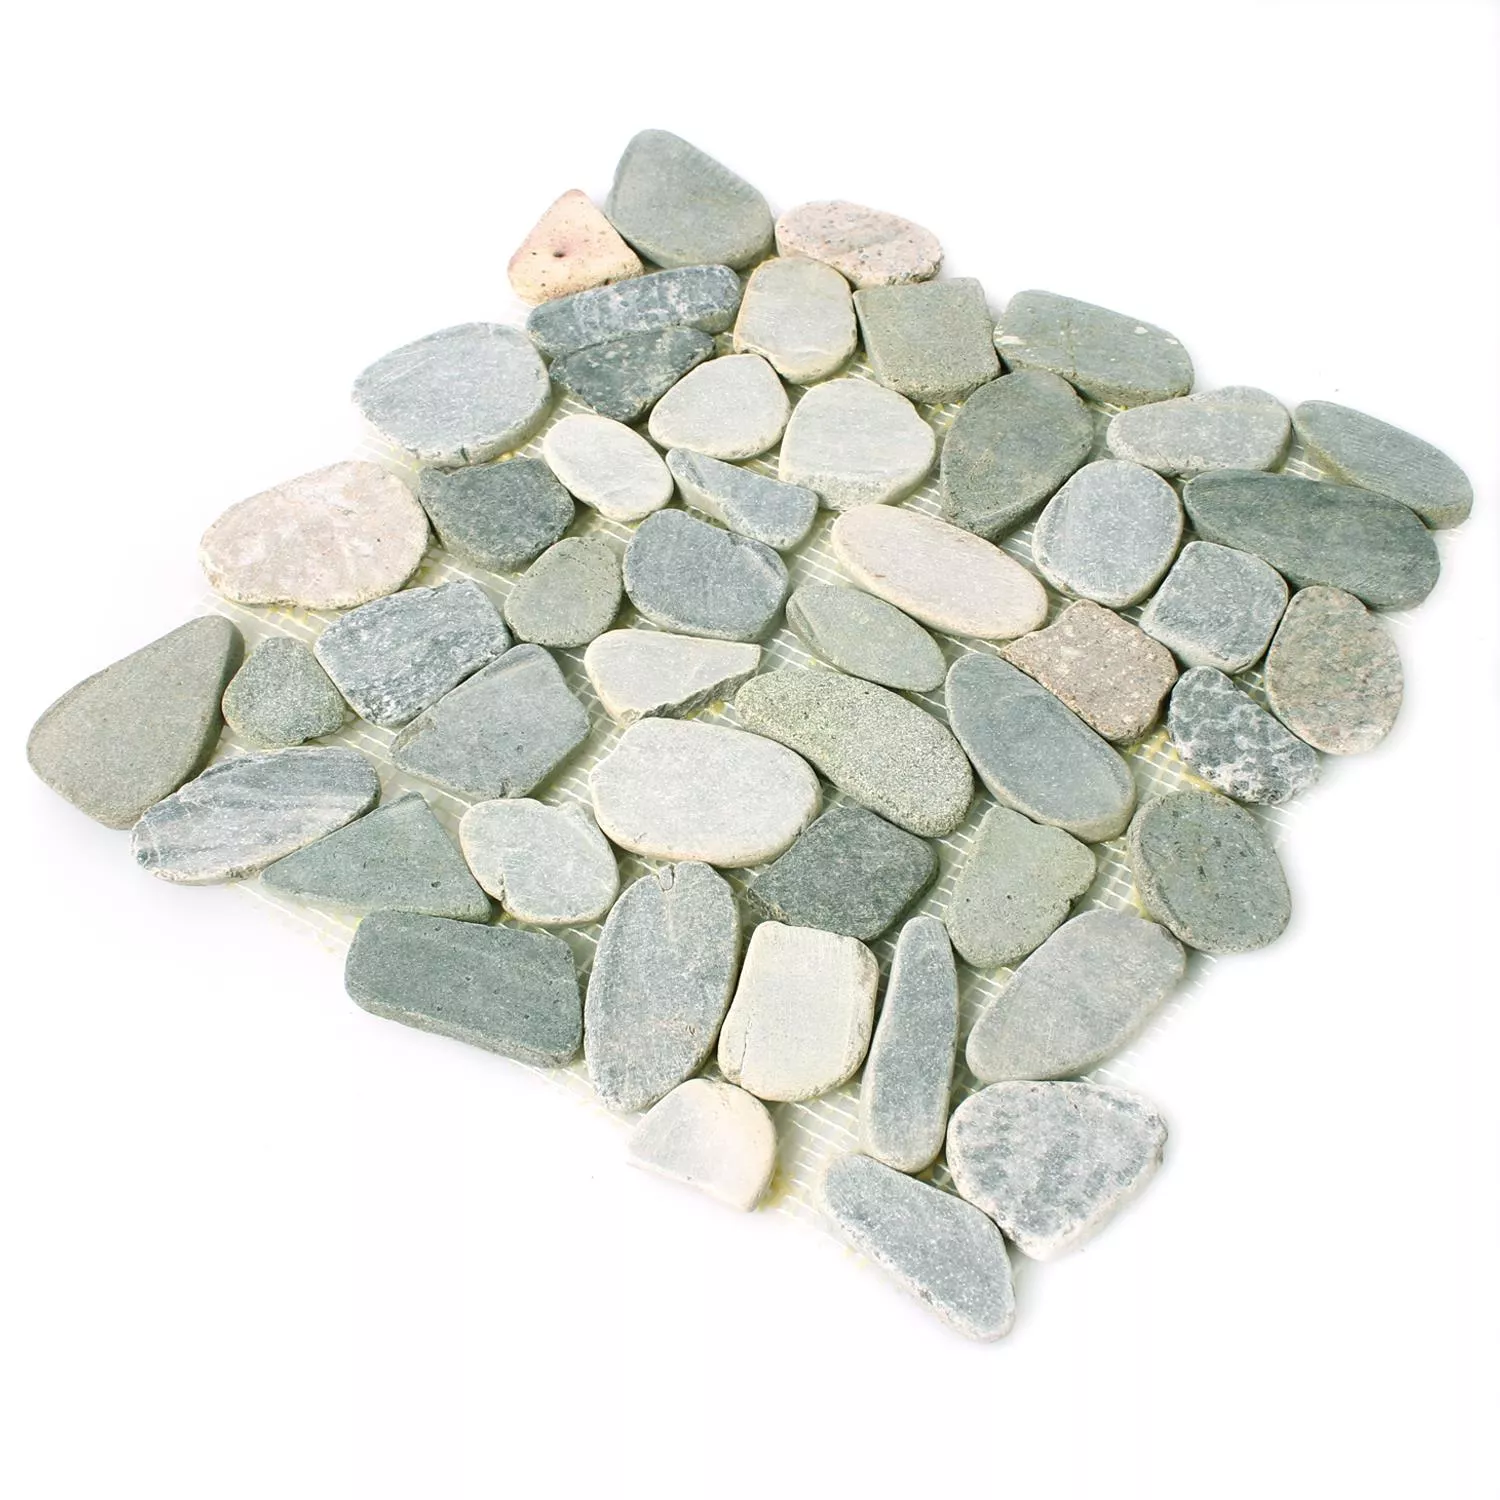 Sample Mosaic Tiles River Pebbles Cut Grey Beige White